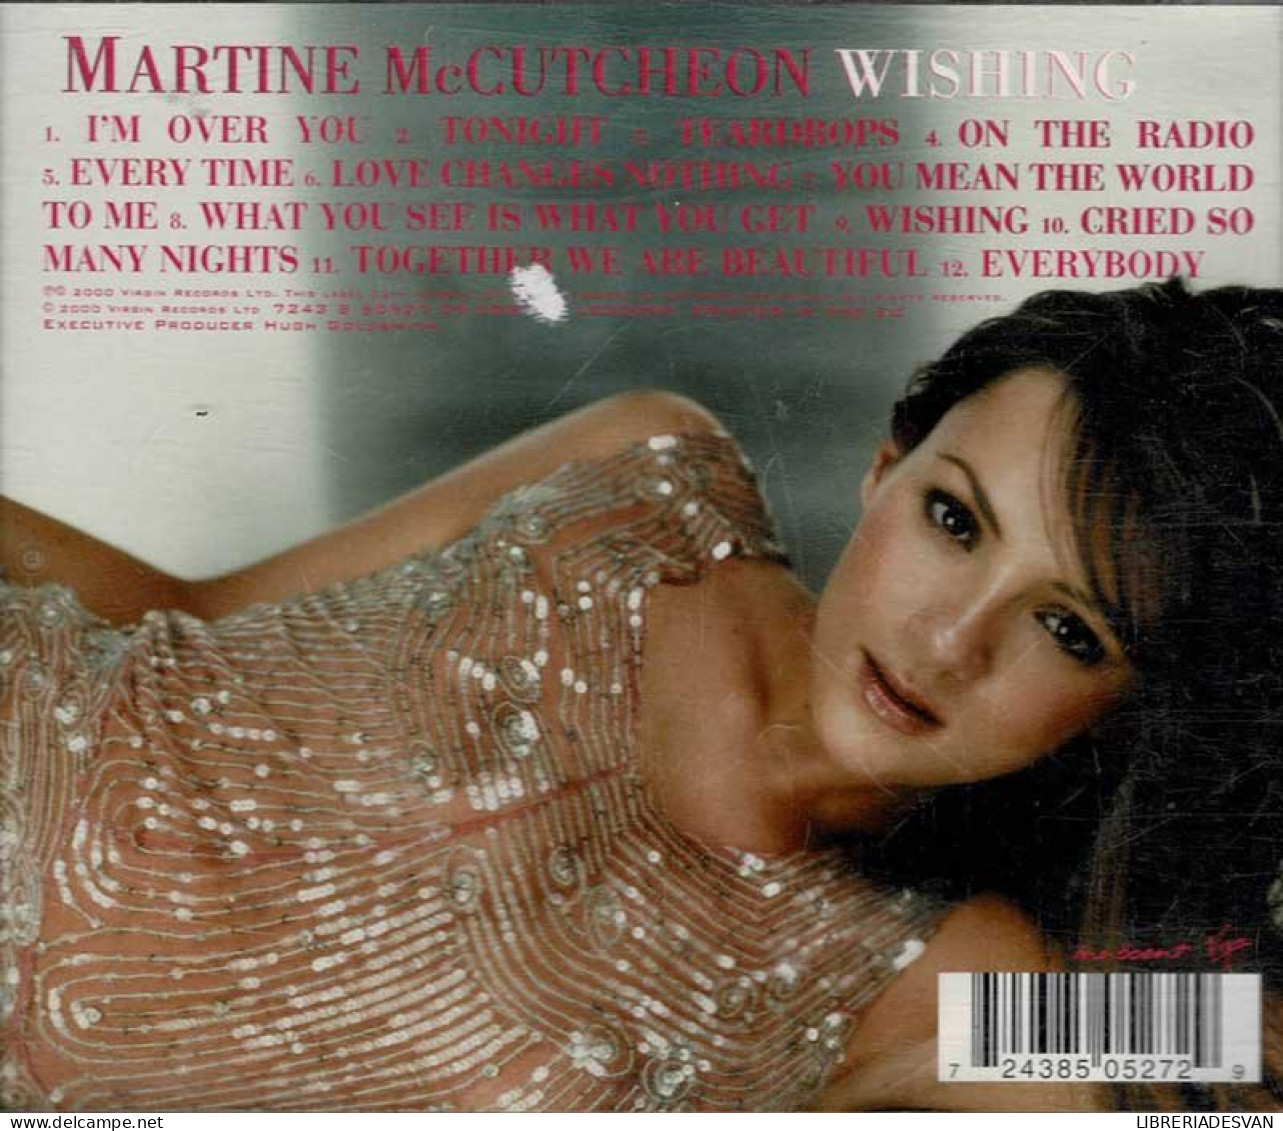 Martine McCutcheon - Wishing. CD - Disco, Pop